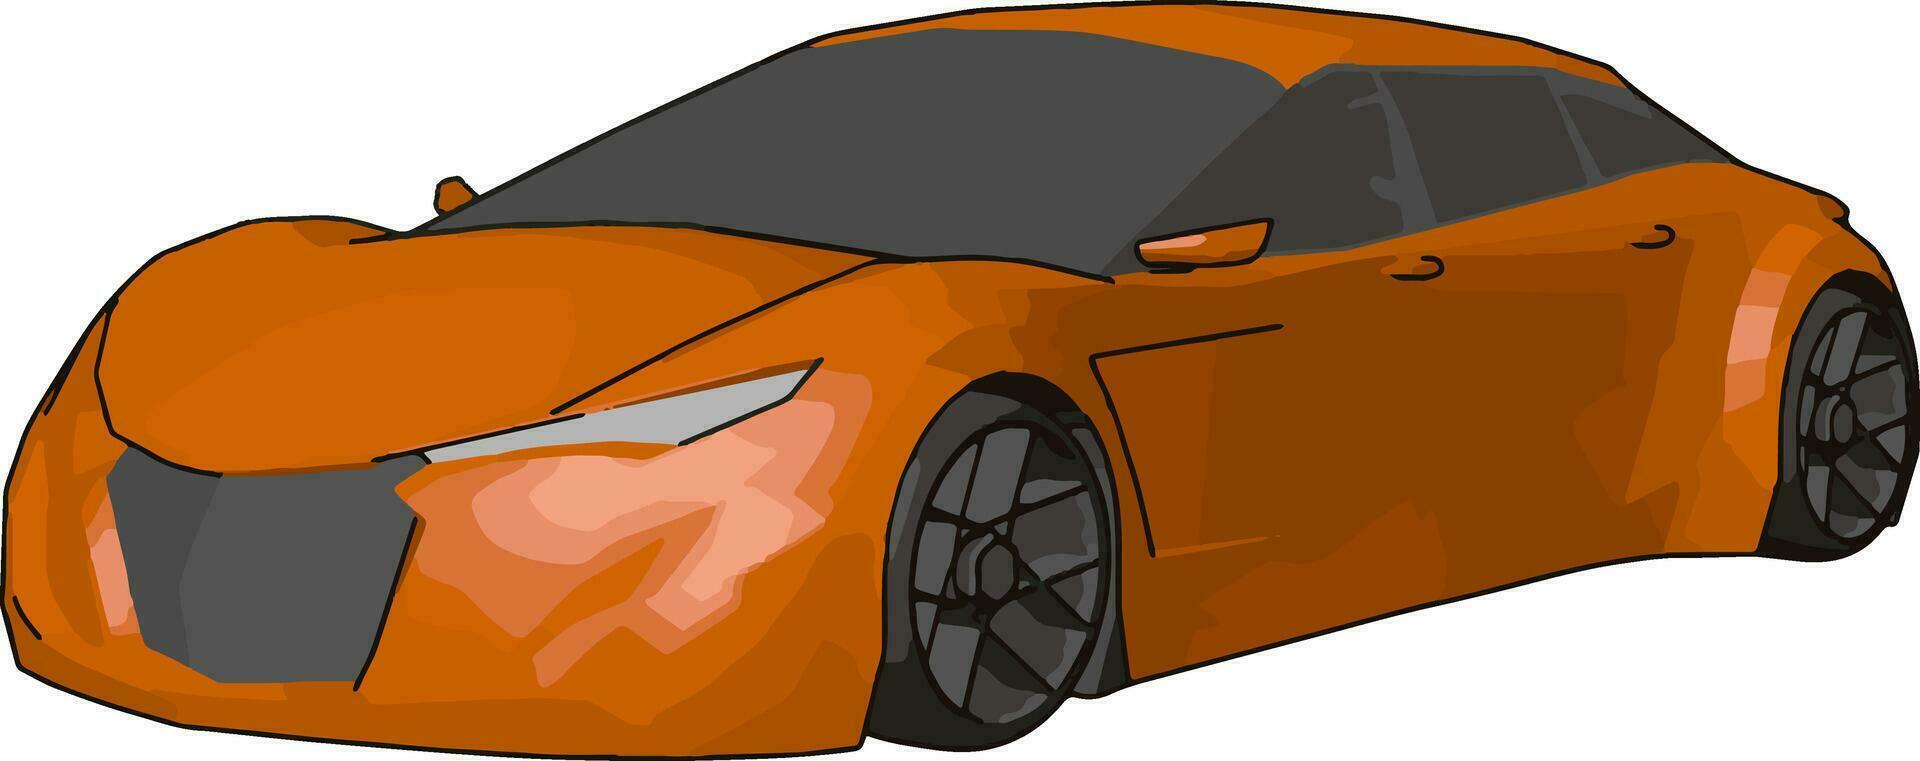 Lamborghini Gallardo orange, illustration, vecteur sur fond blanc.